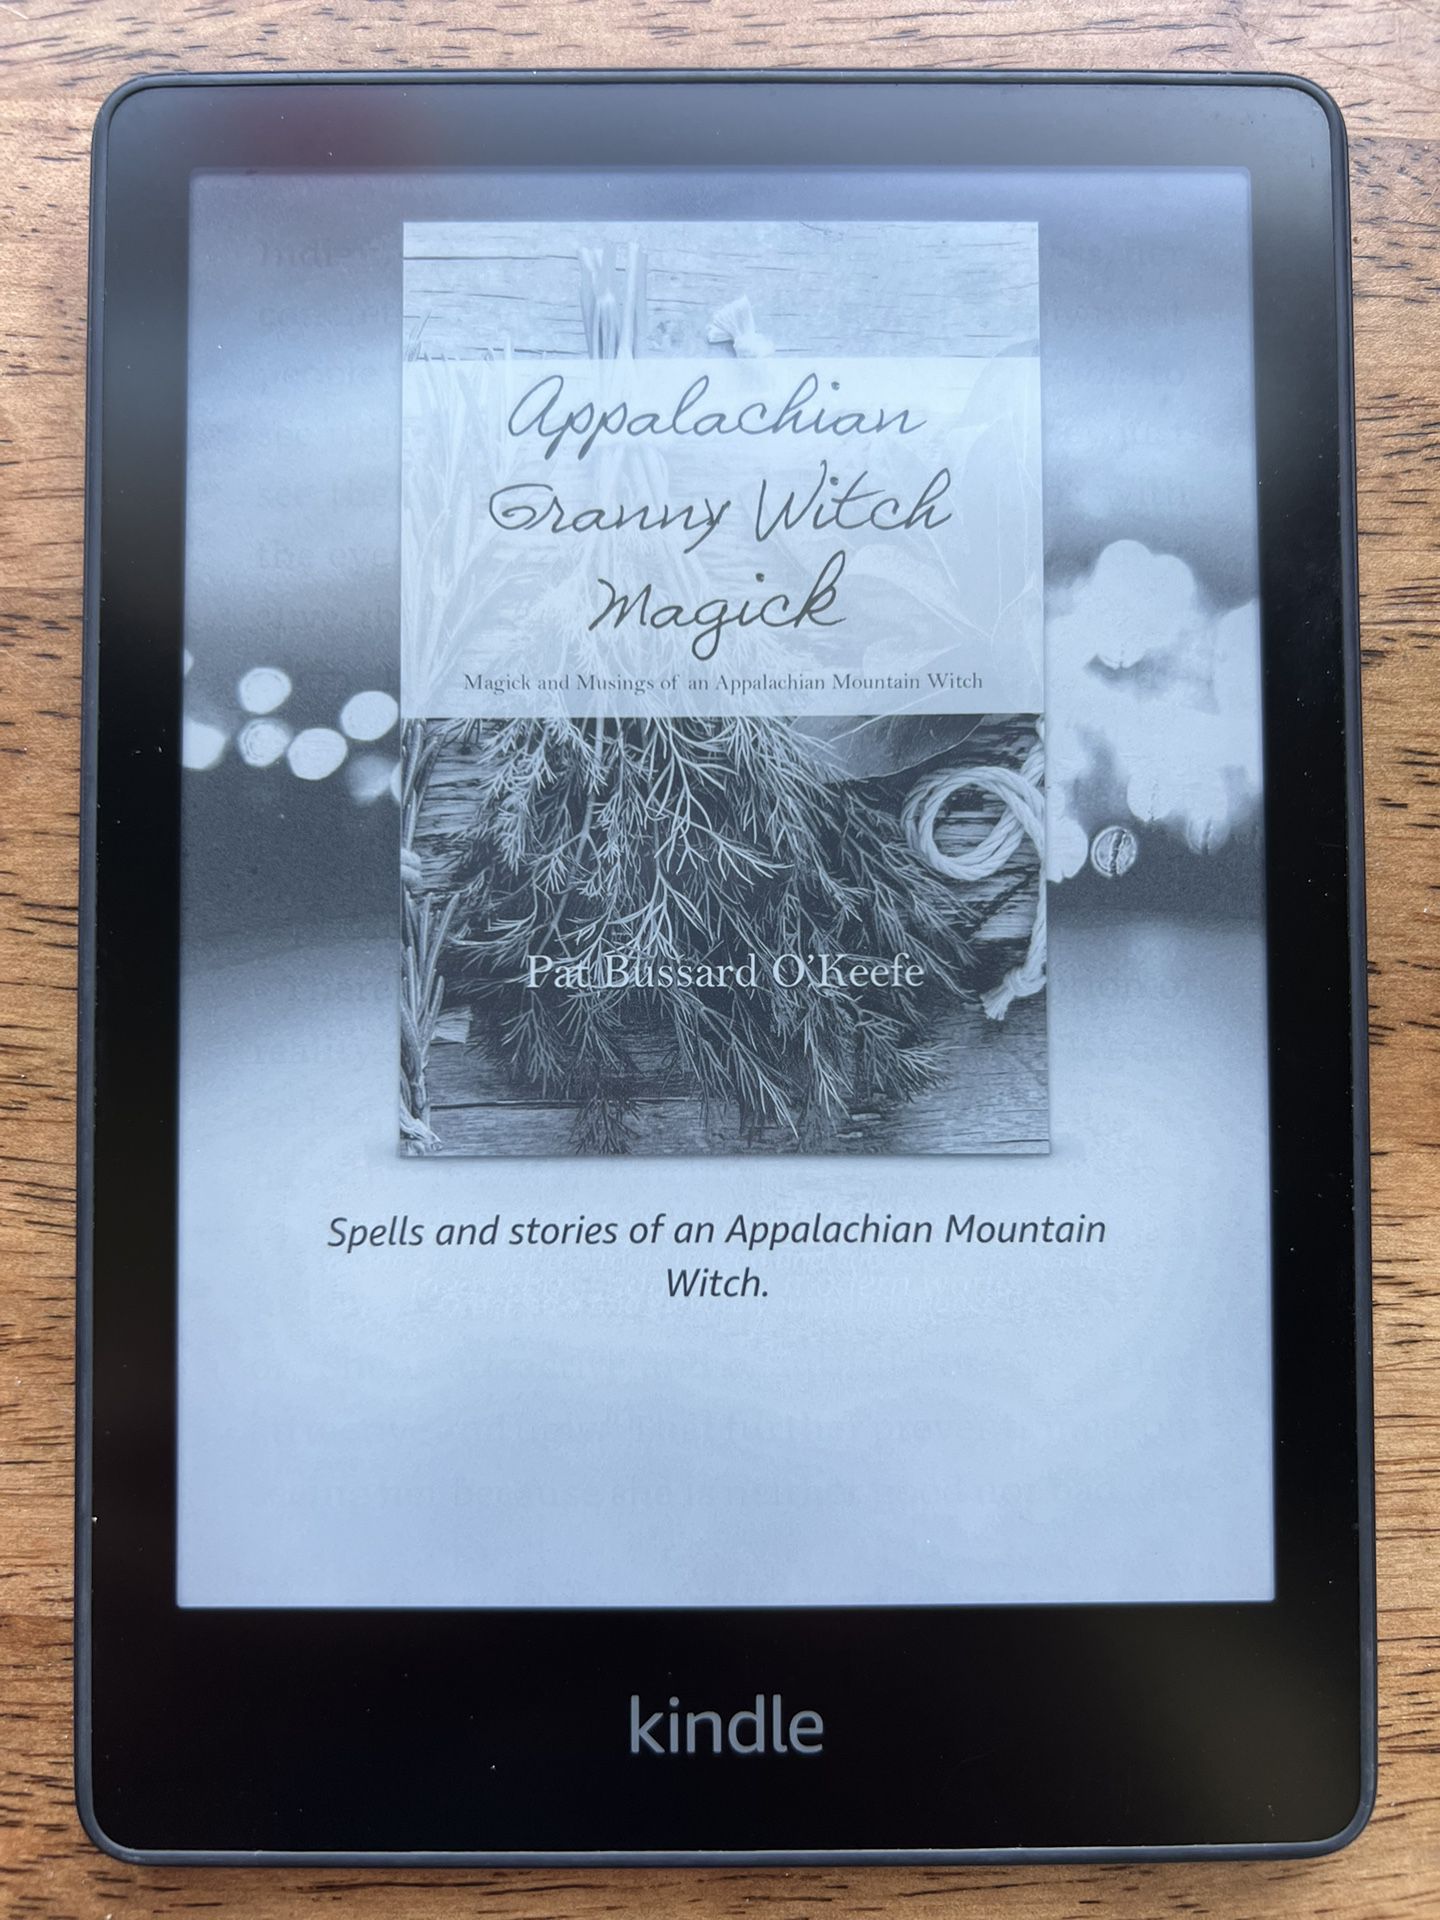 Kindle Amazon Paperwhite 8 GB 6.8” Display 